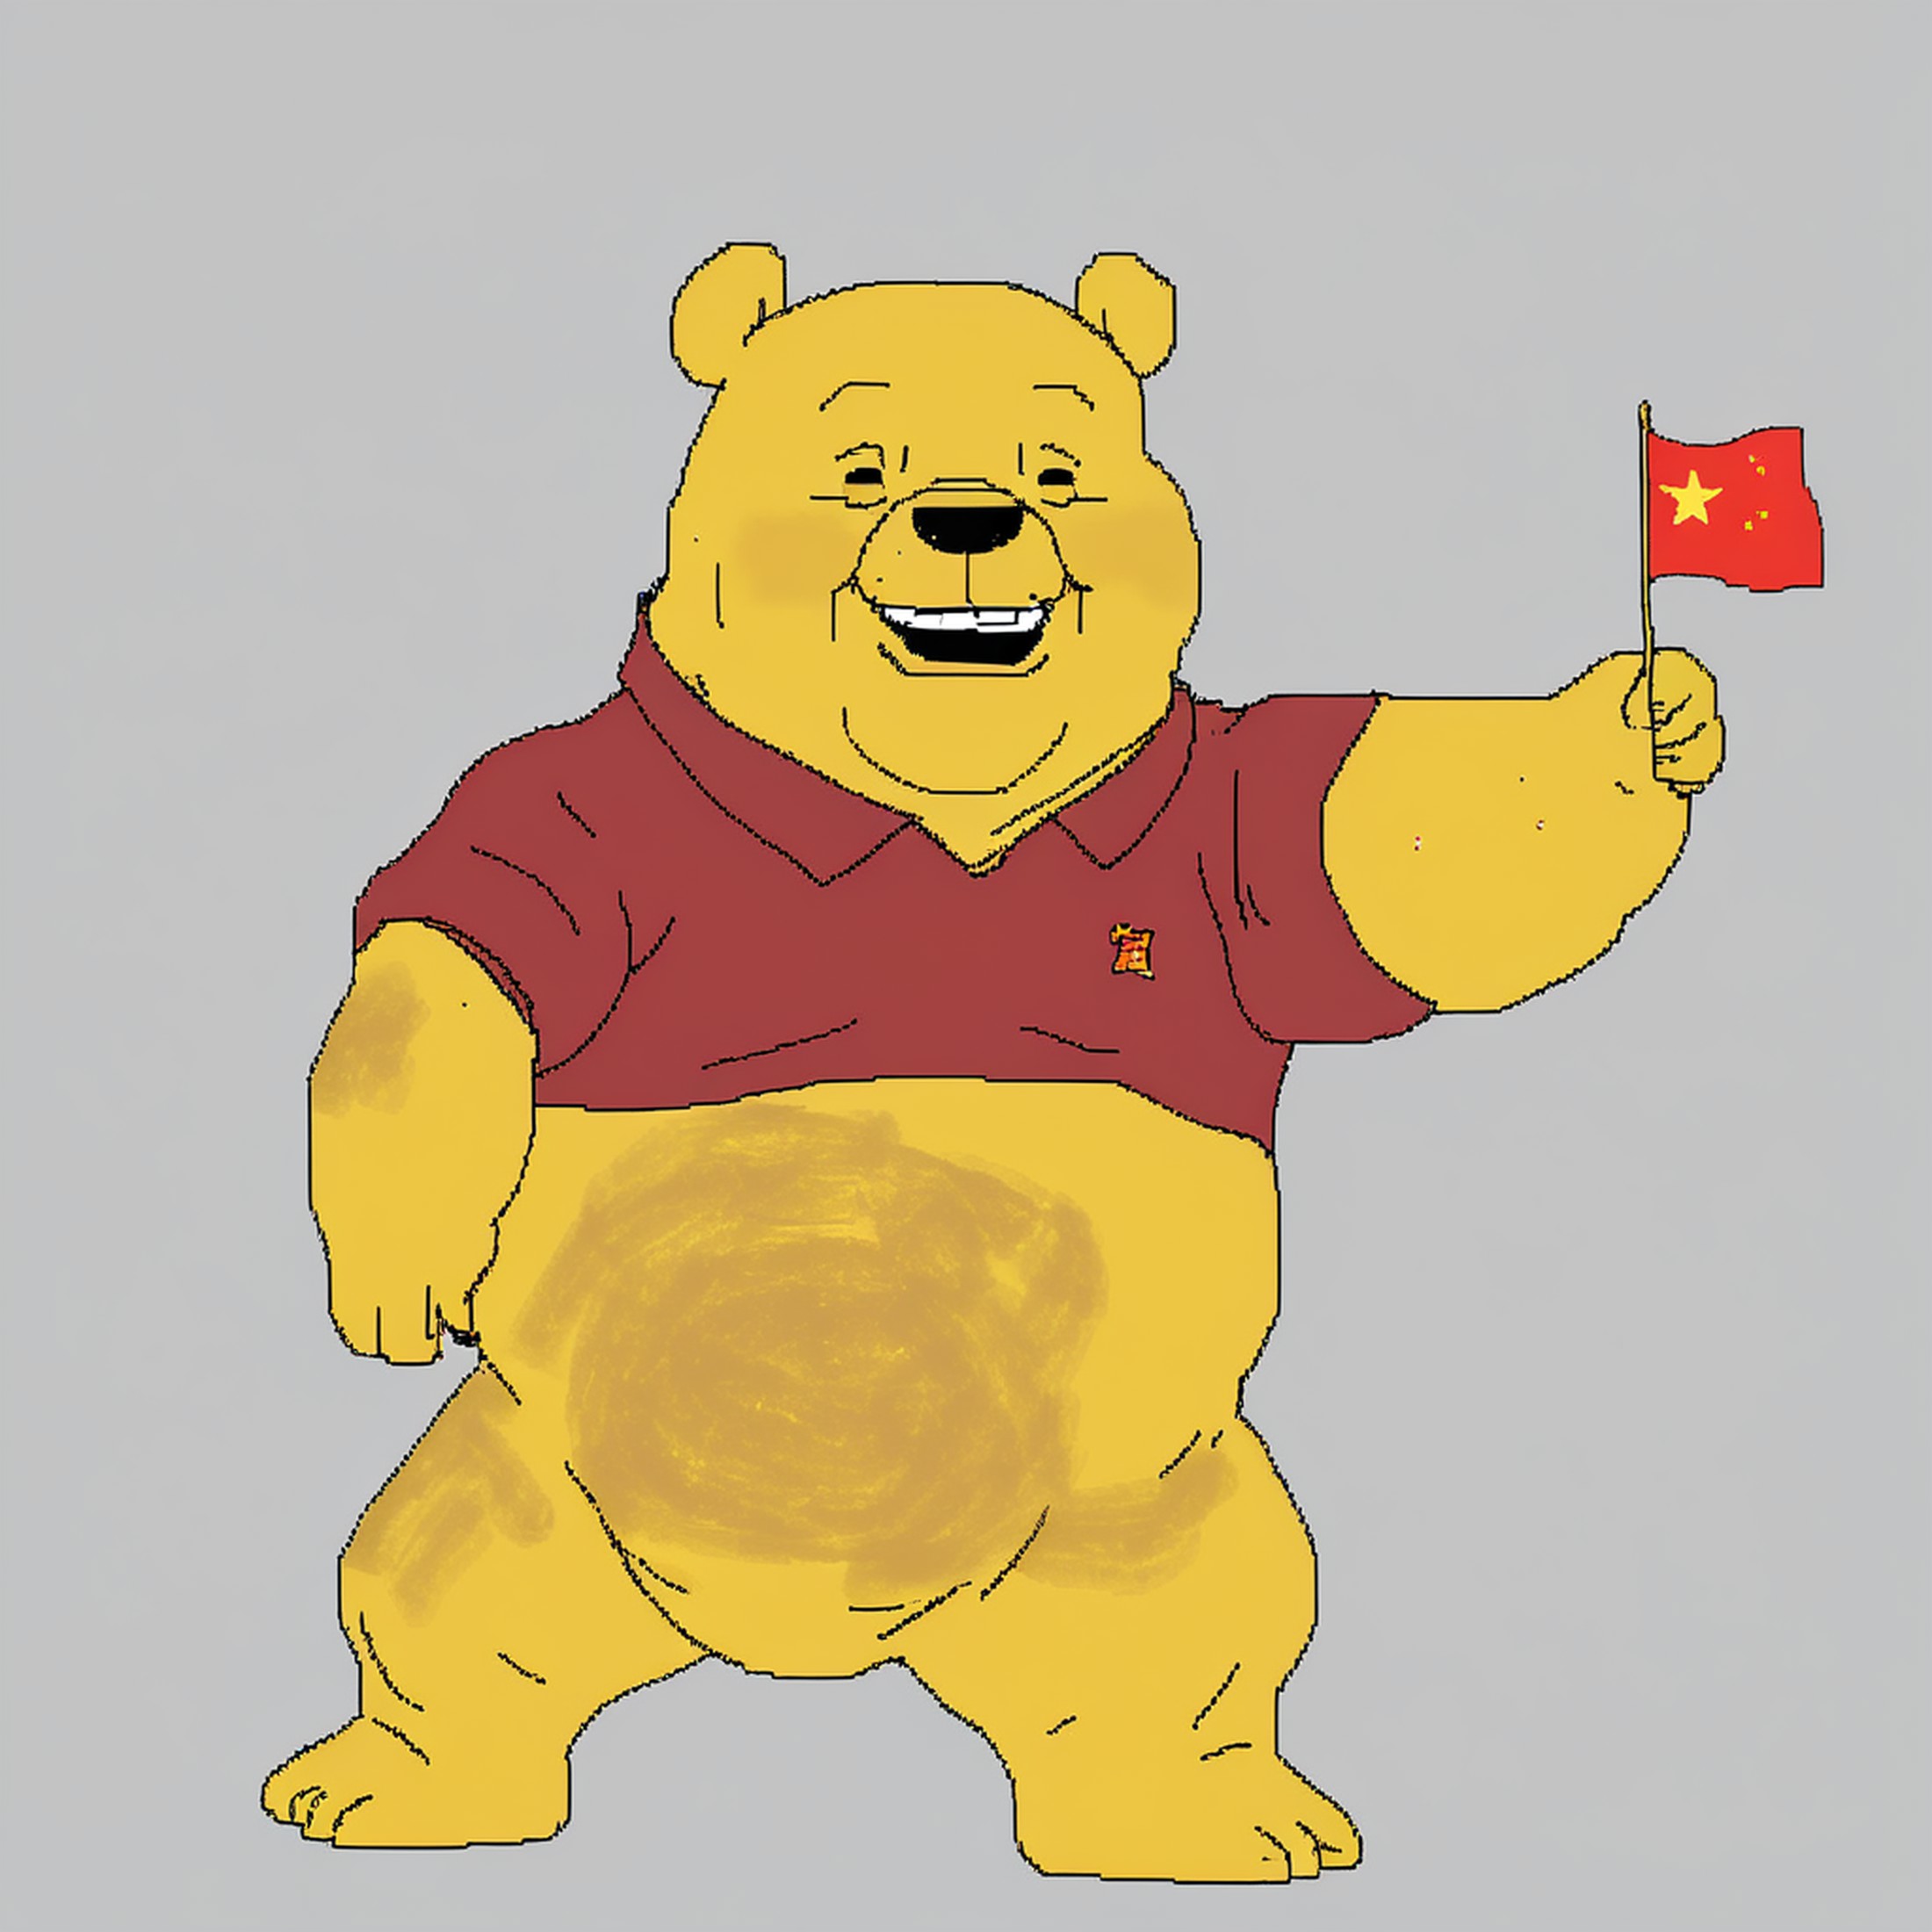 (Xi Jinping winnie the poo bear), (mspaint, ms paint drawing), (bad quality, bad artist)